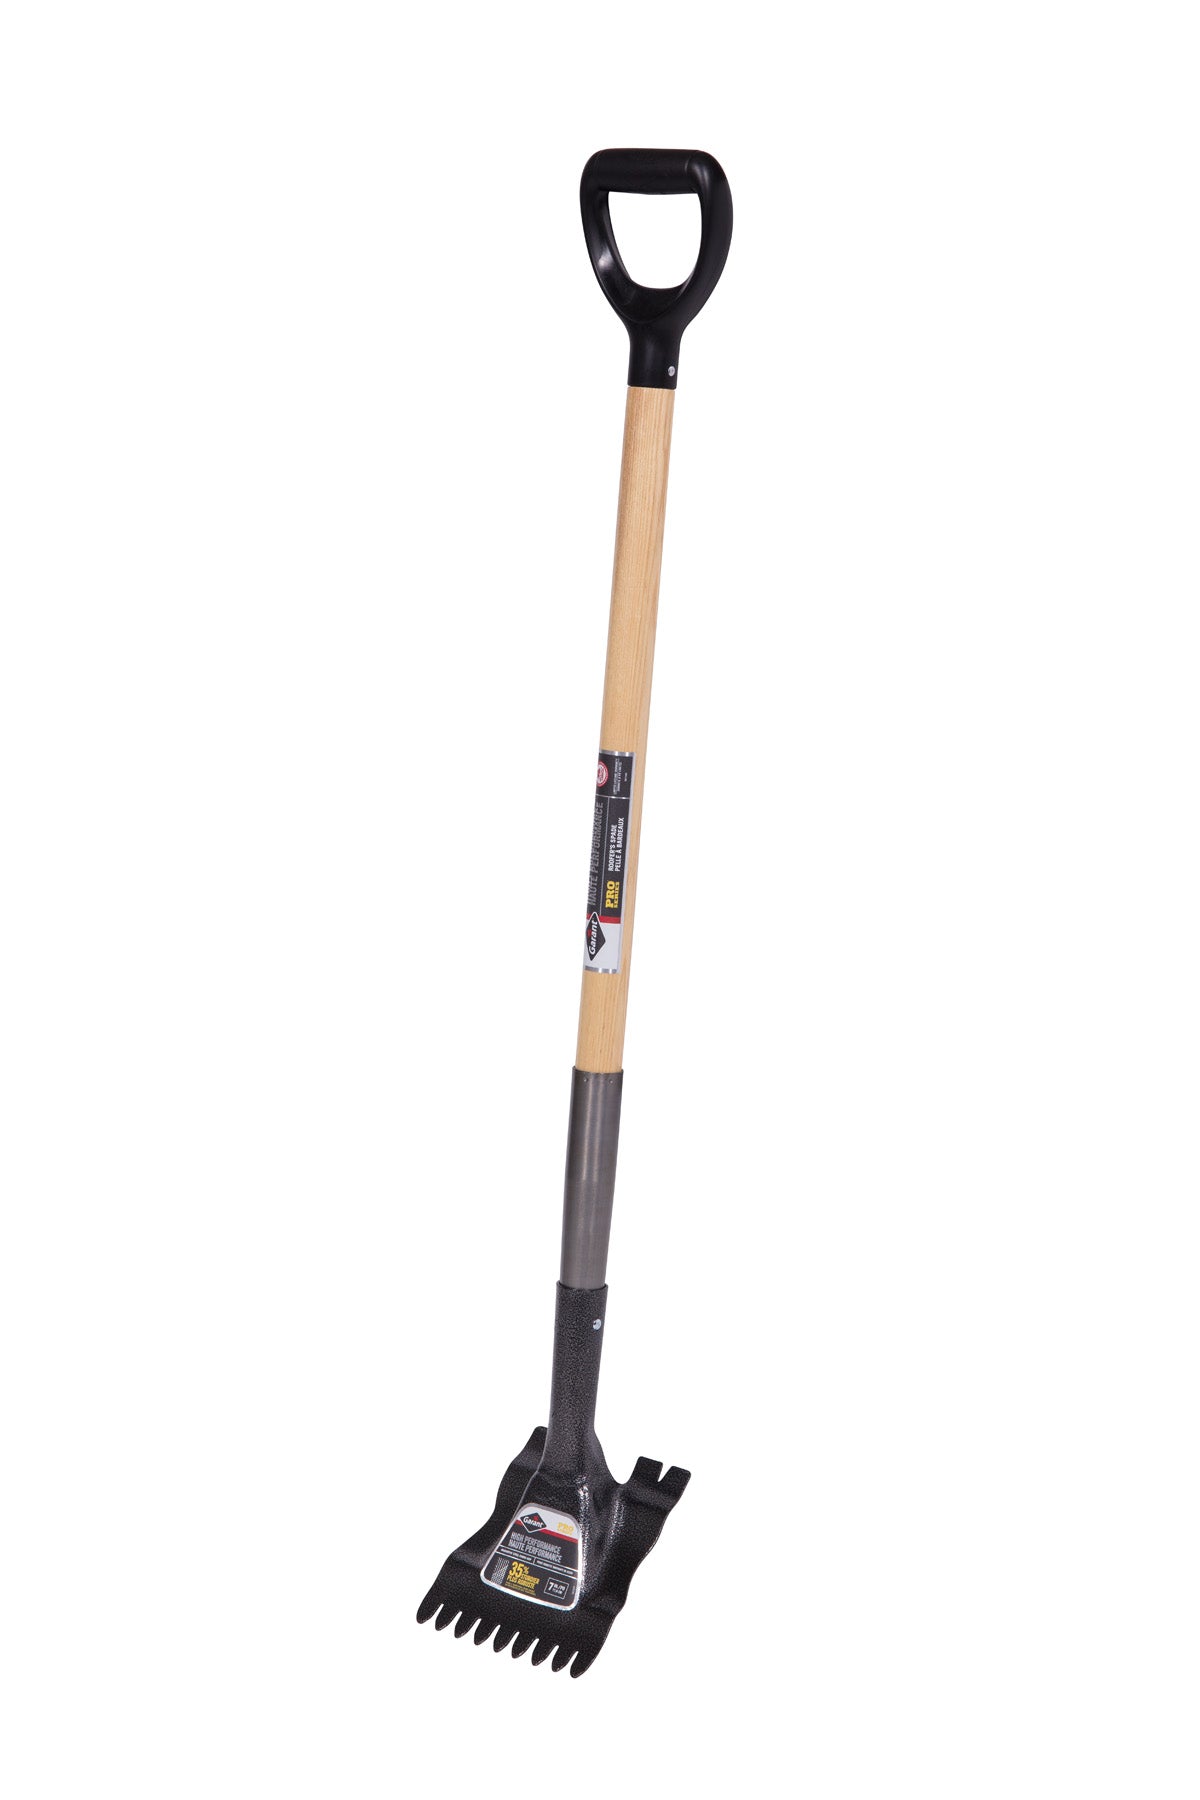 Roofer's spade, 7" steel blade, steel power grip, D-handle, Garant Pro HP